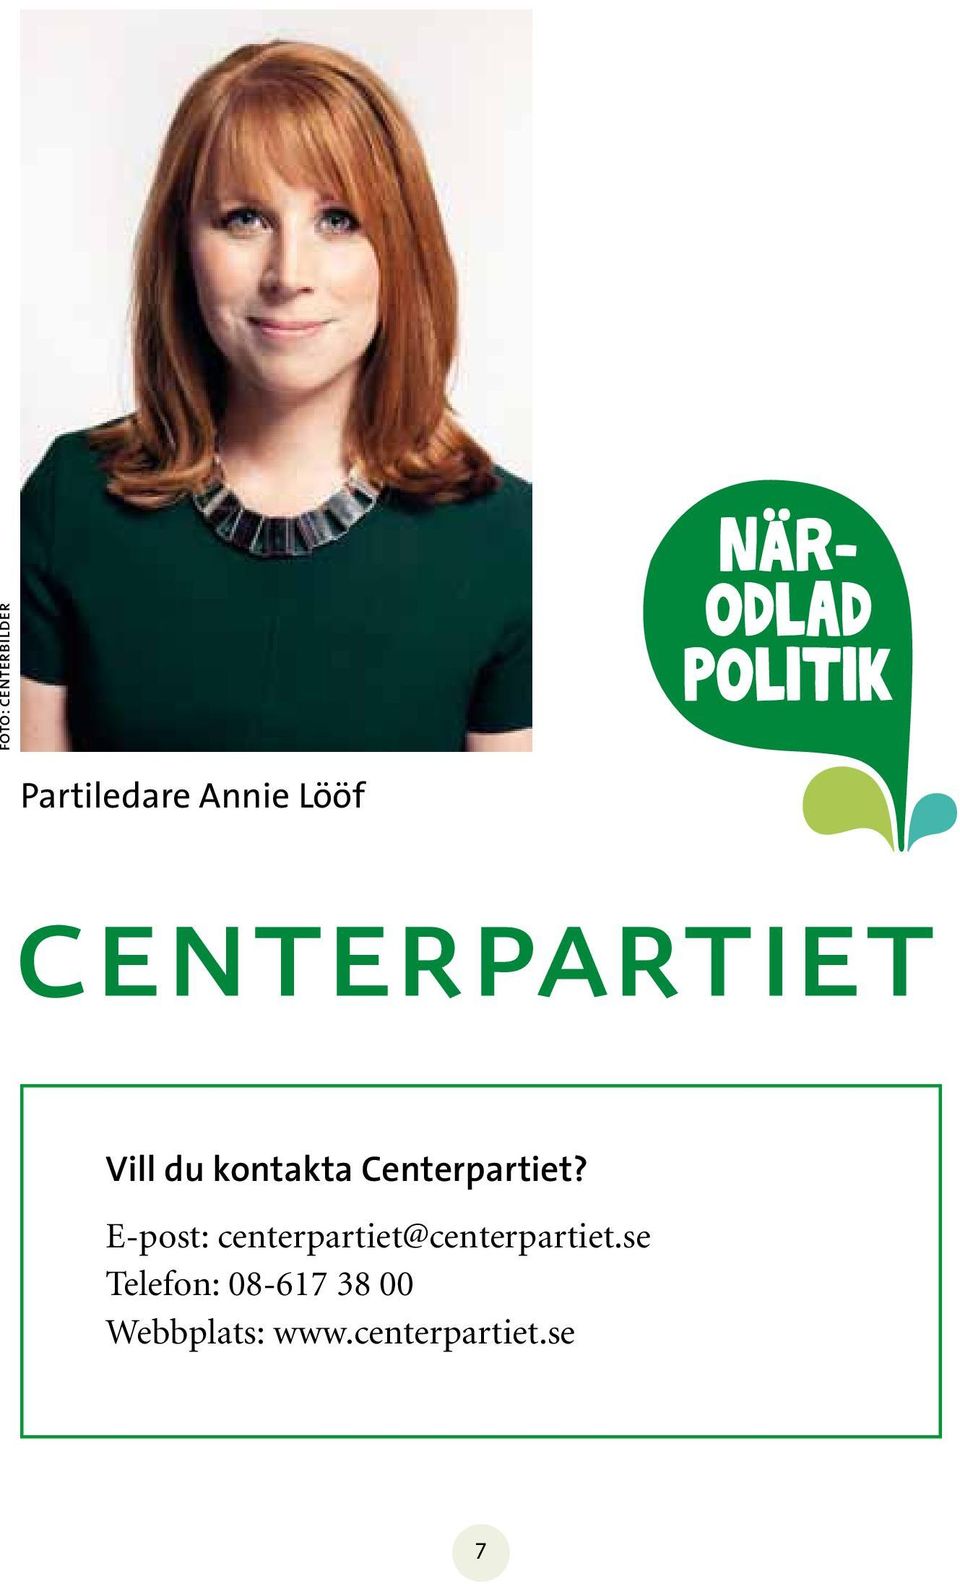 E-post: centerpartiet@centerpartiet.